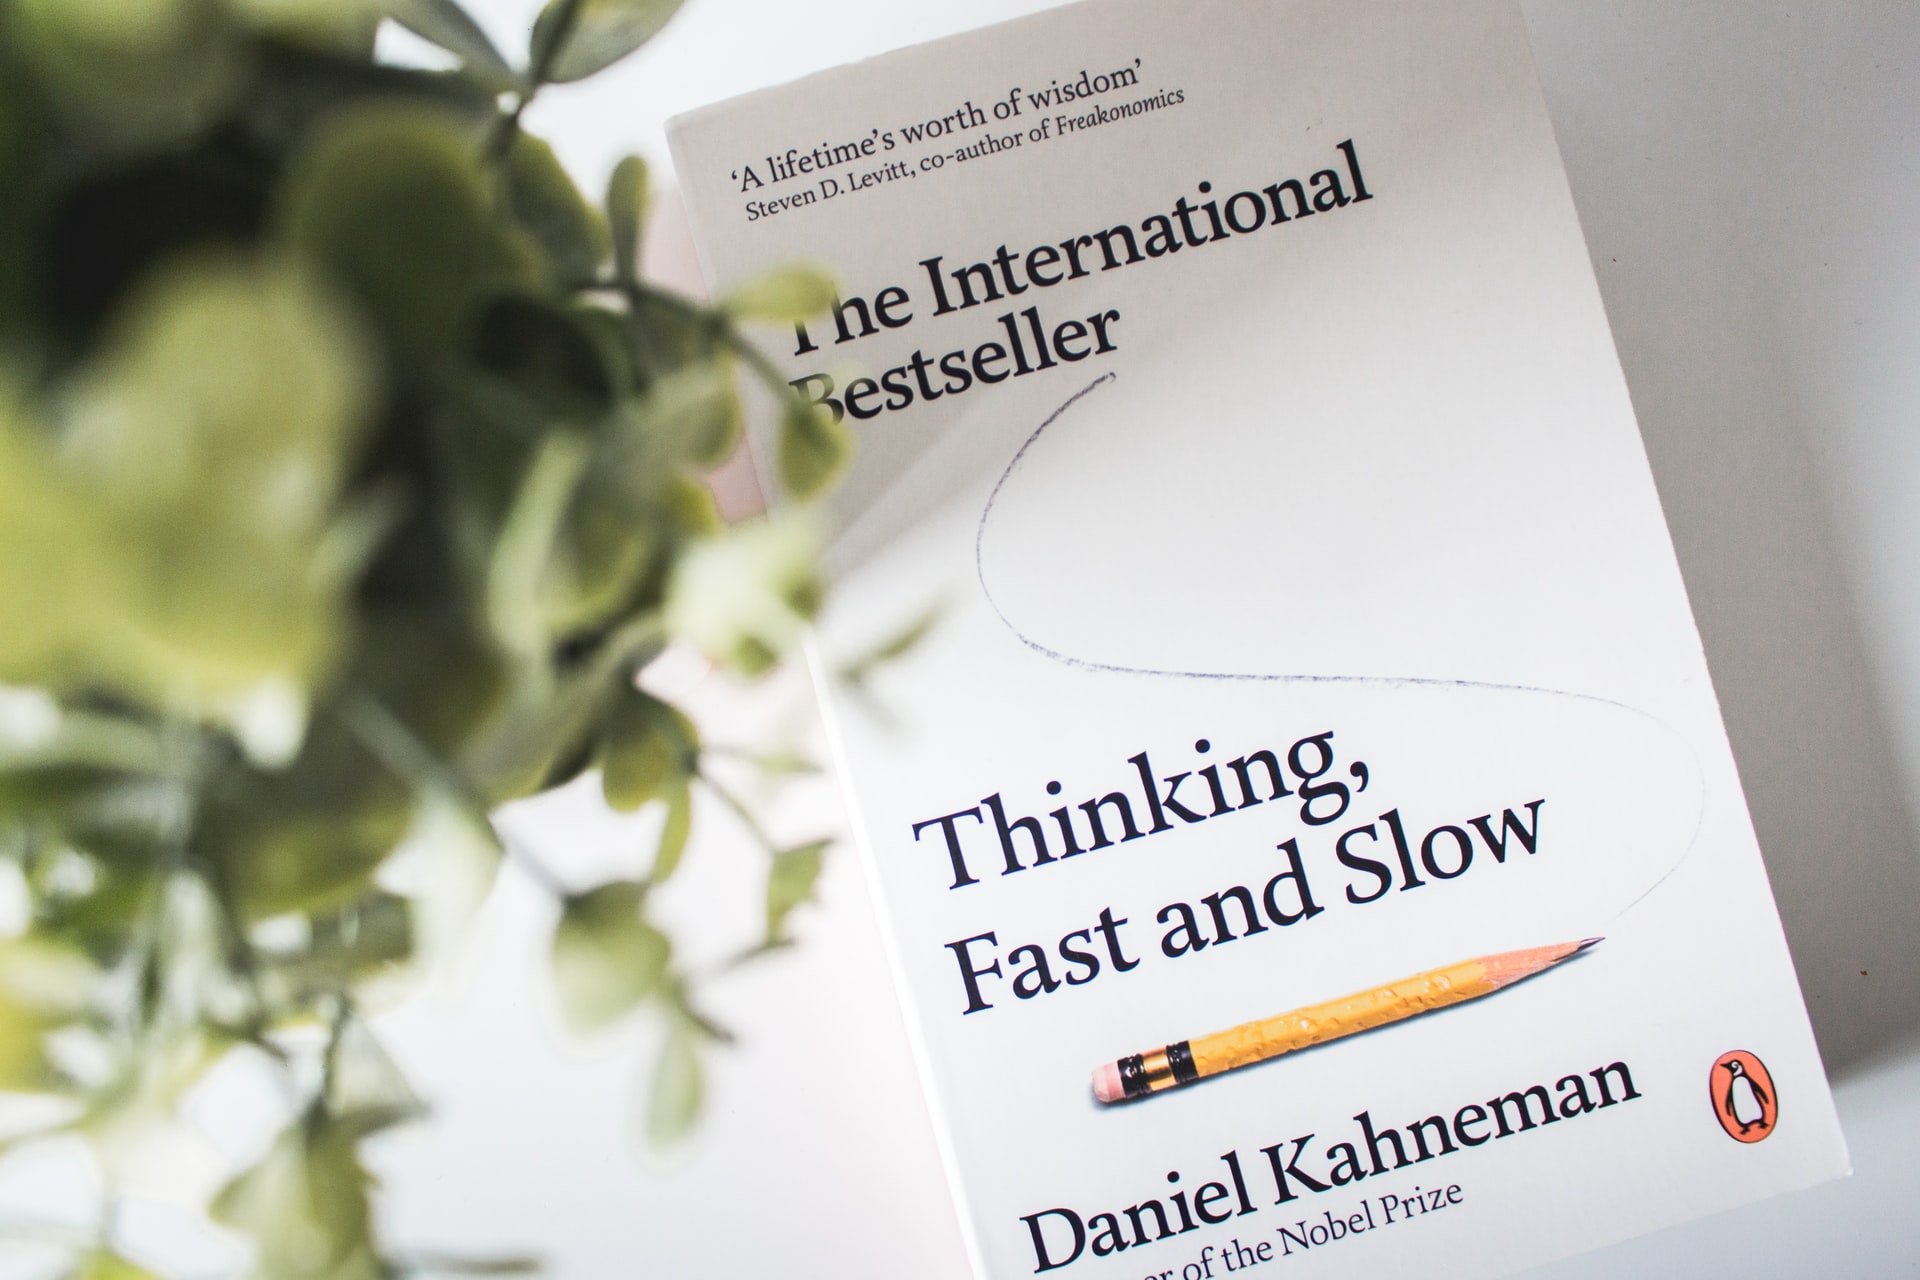 Kahneman's Book